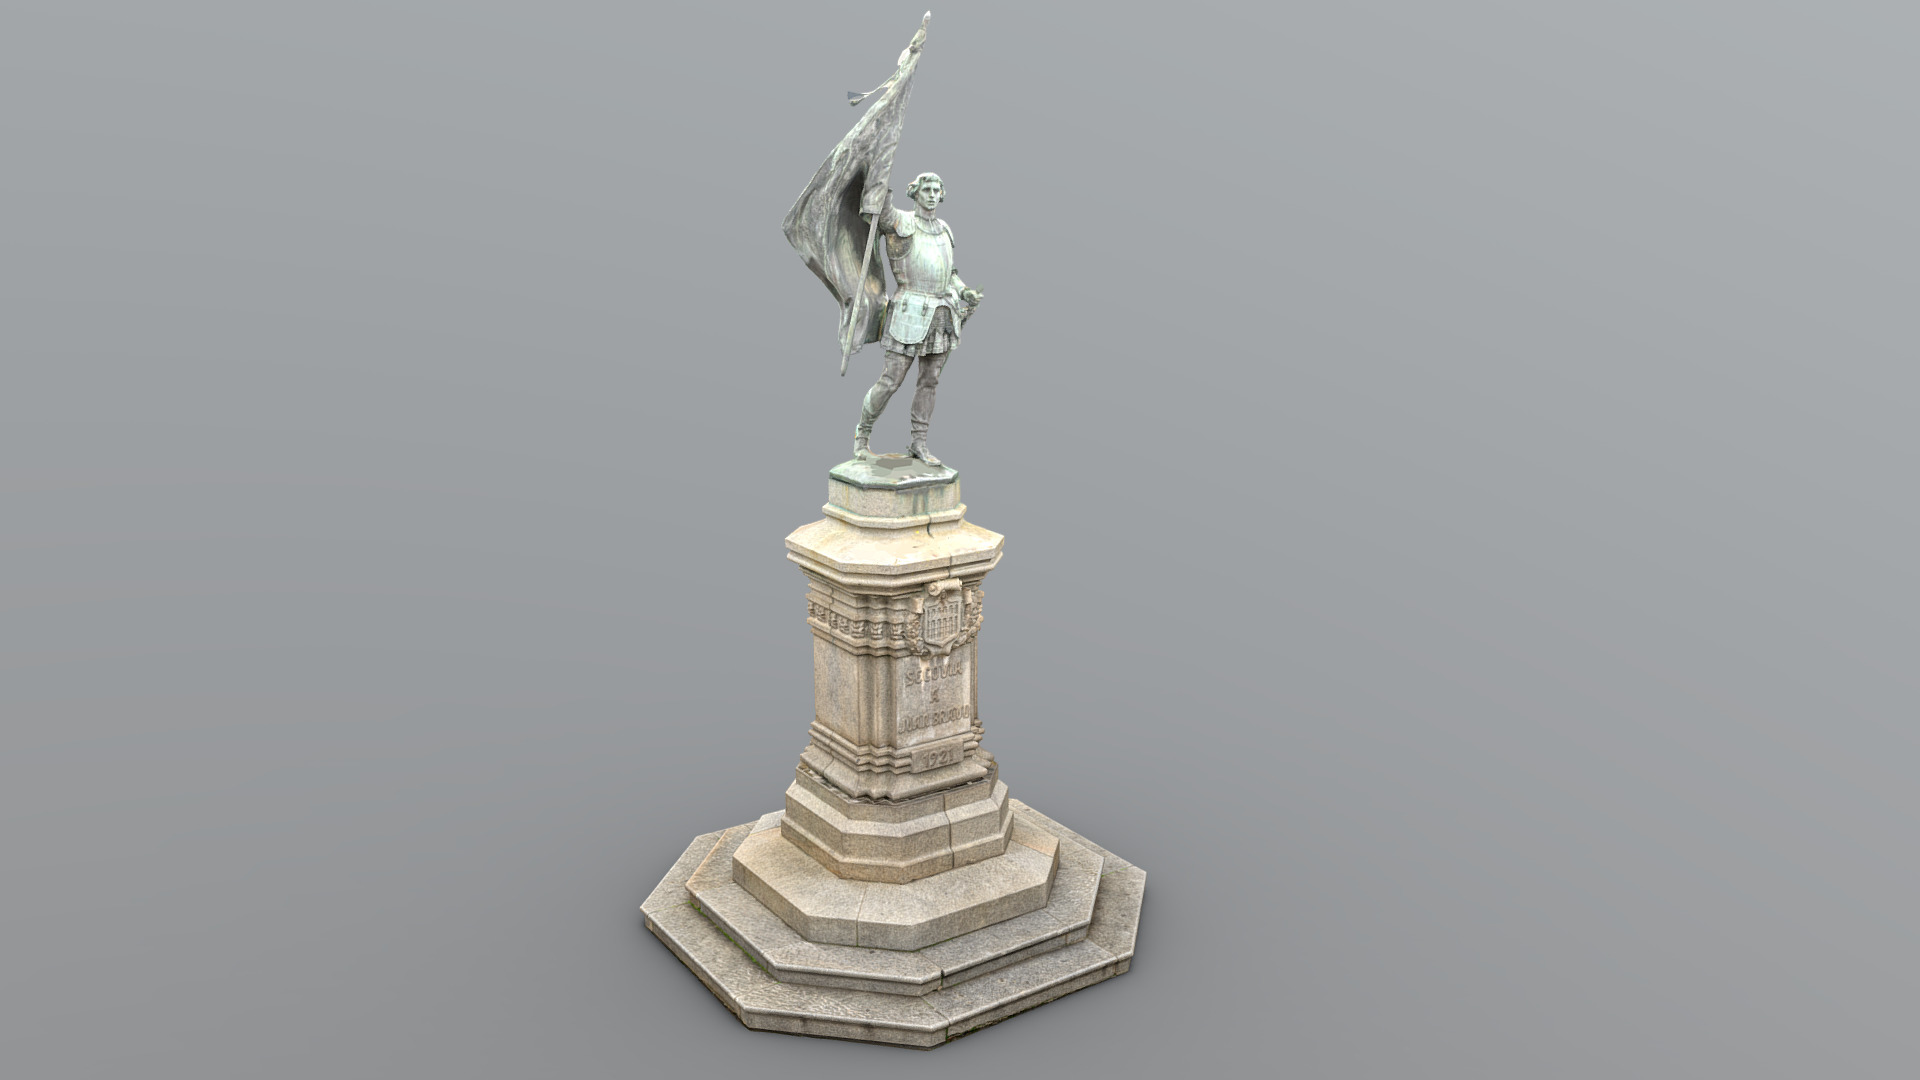 3D model The city of Segovia to Juan Bravo - This is a 3D model of the The city of Segovia to Juan Bravo. The 3D model is about a statue of a person holding a staff.